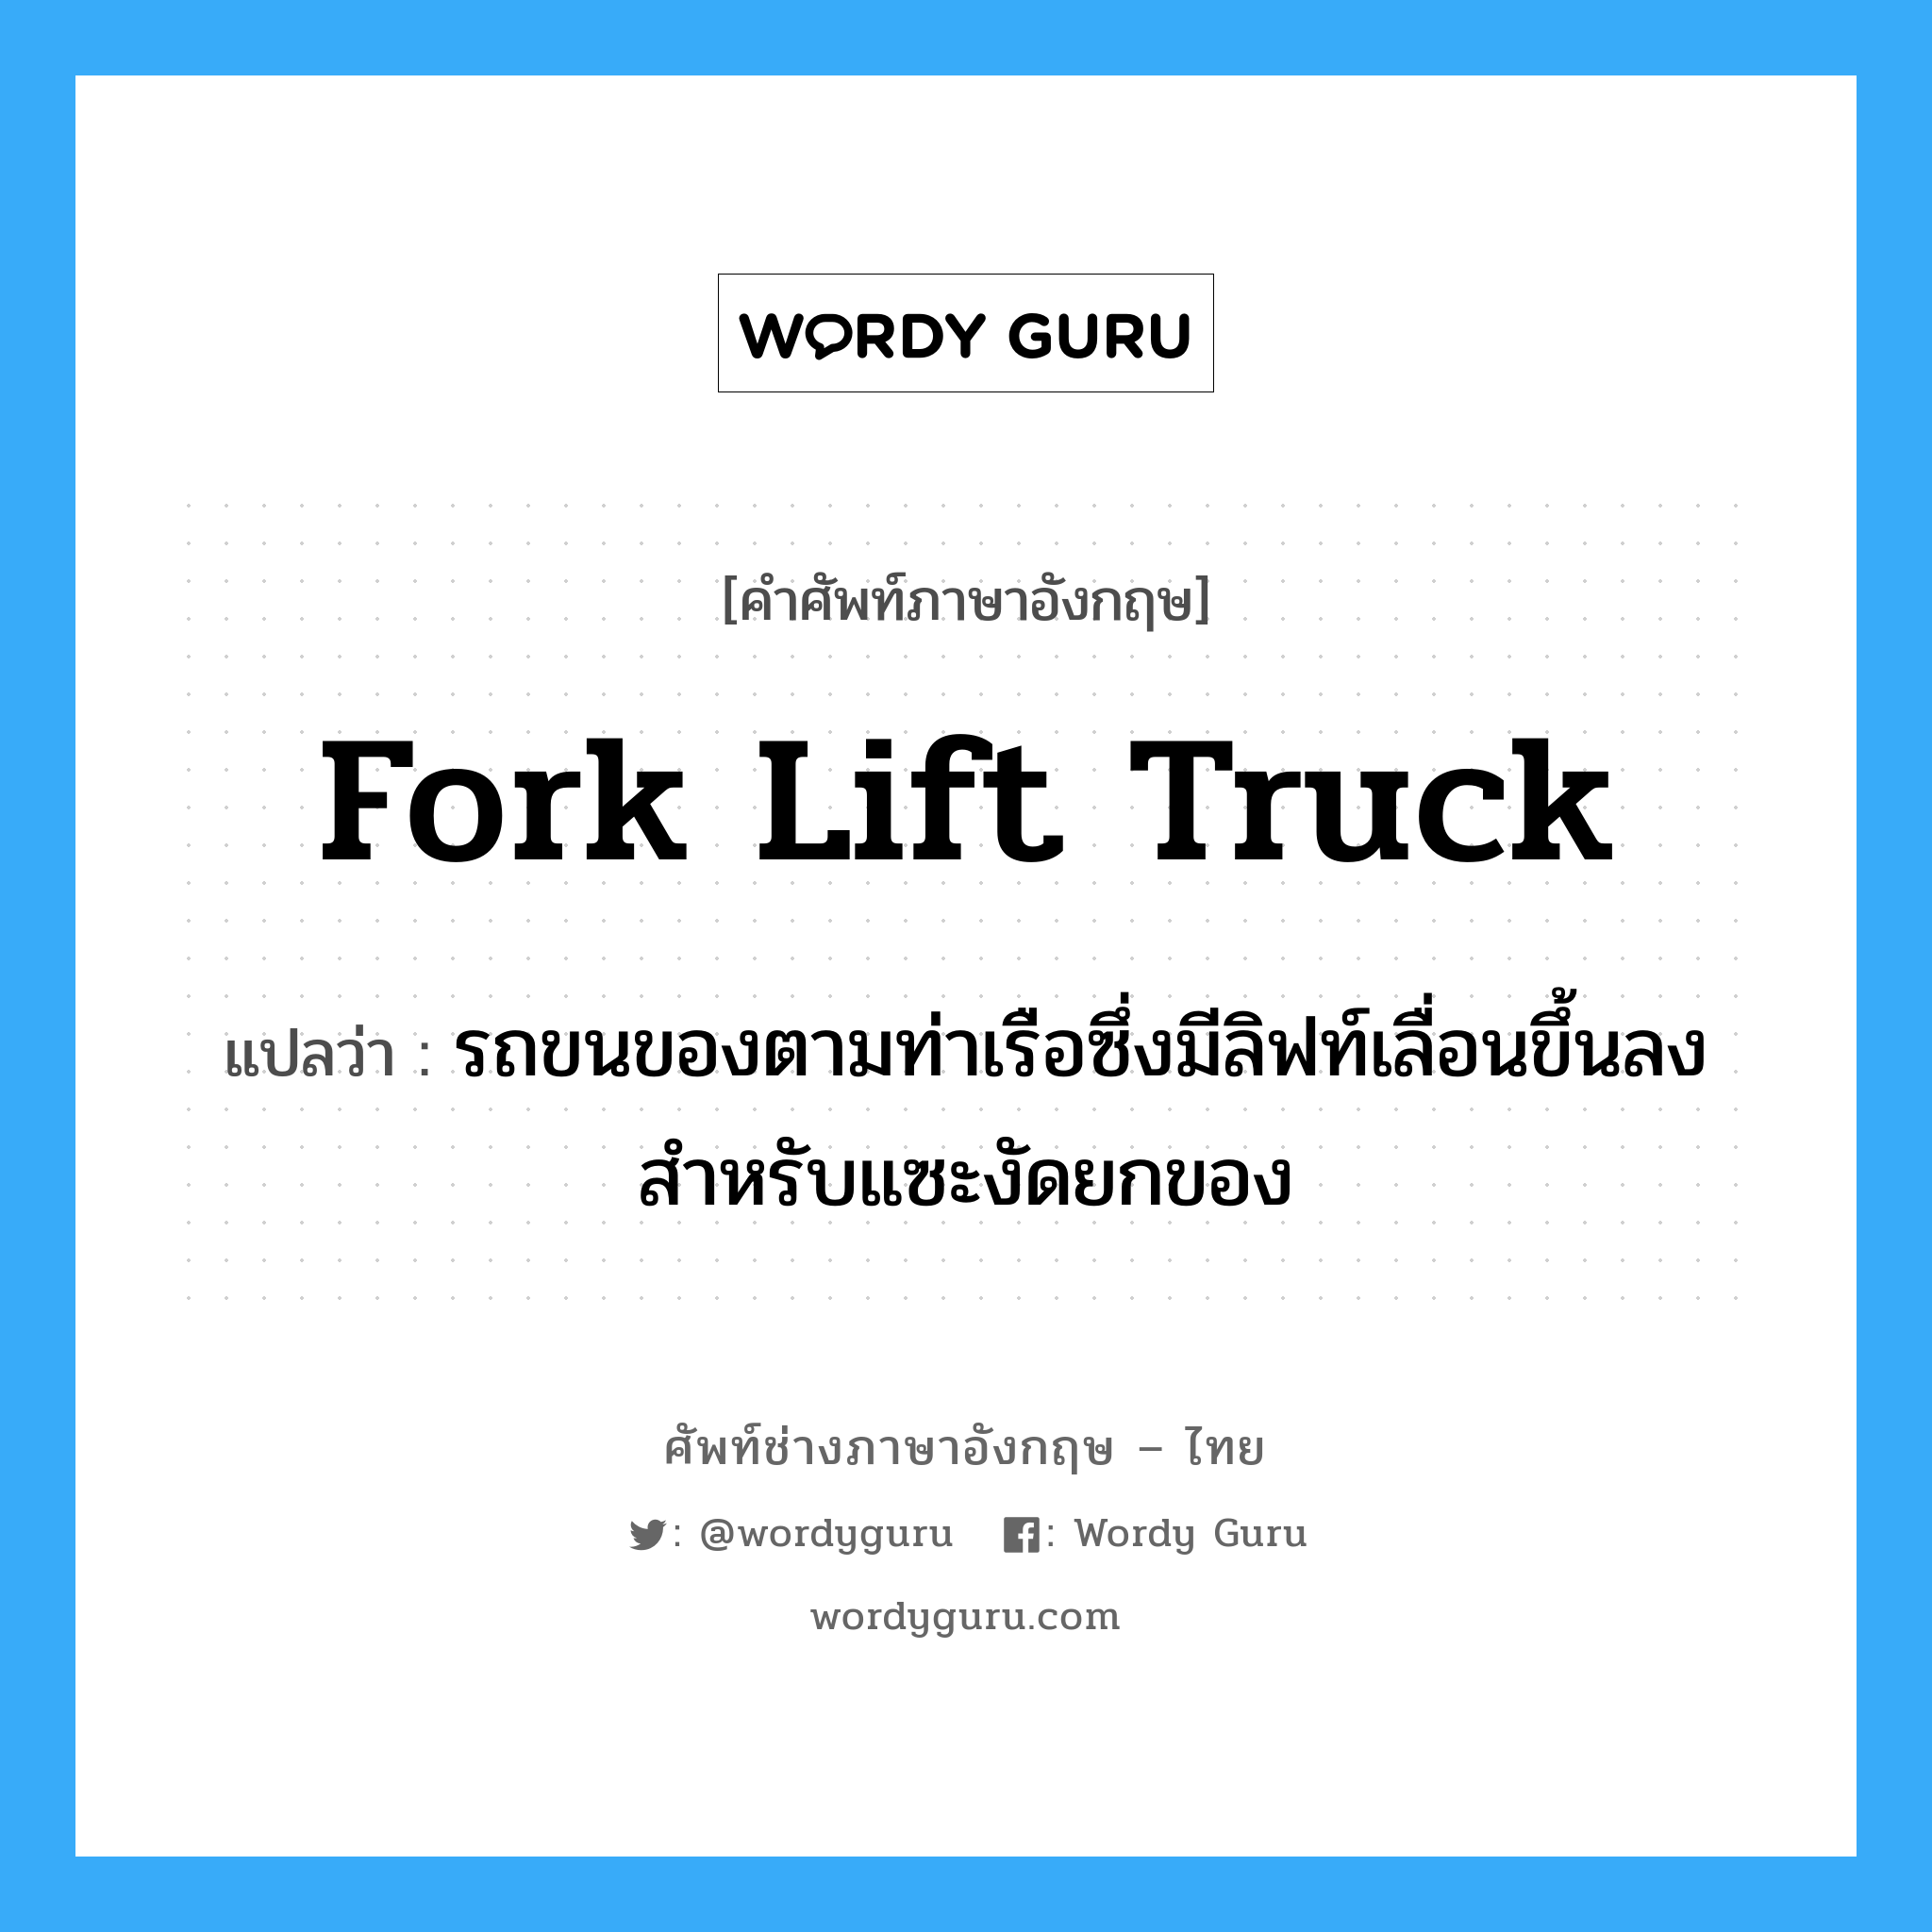 fork lift truck แปลว่า?, คำศัพท์ช่างภาษาอังกฤษ - ไทย fork lift truck คำศัพท์ภาษาอังกฤษ fork lift truck แปลว่า รถขนของตามท่าเรือซึ่งมีลิฟท์เลื่อนขึ้นลงสำหรับแซะงัดยกของ